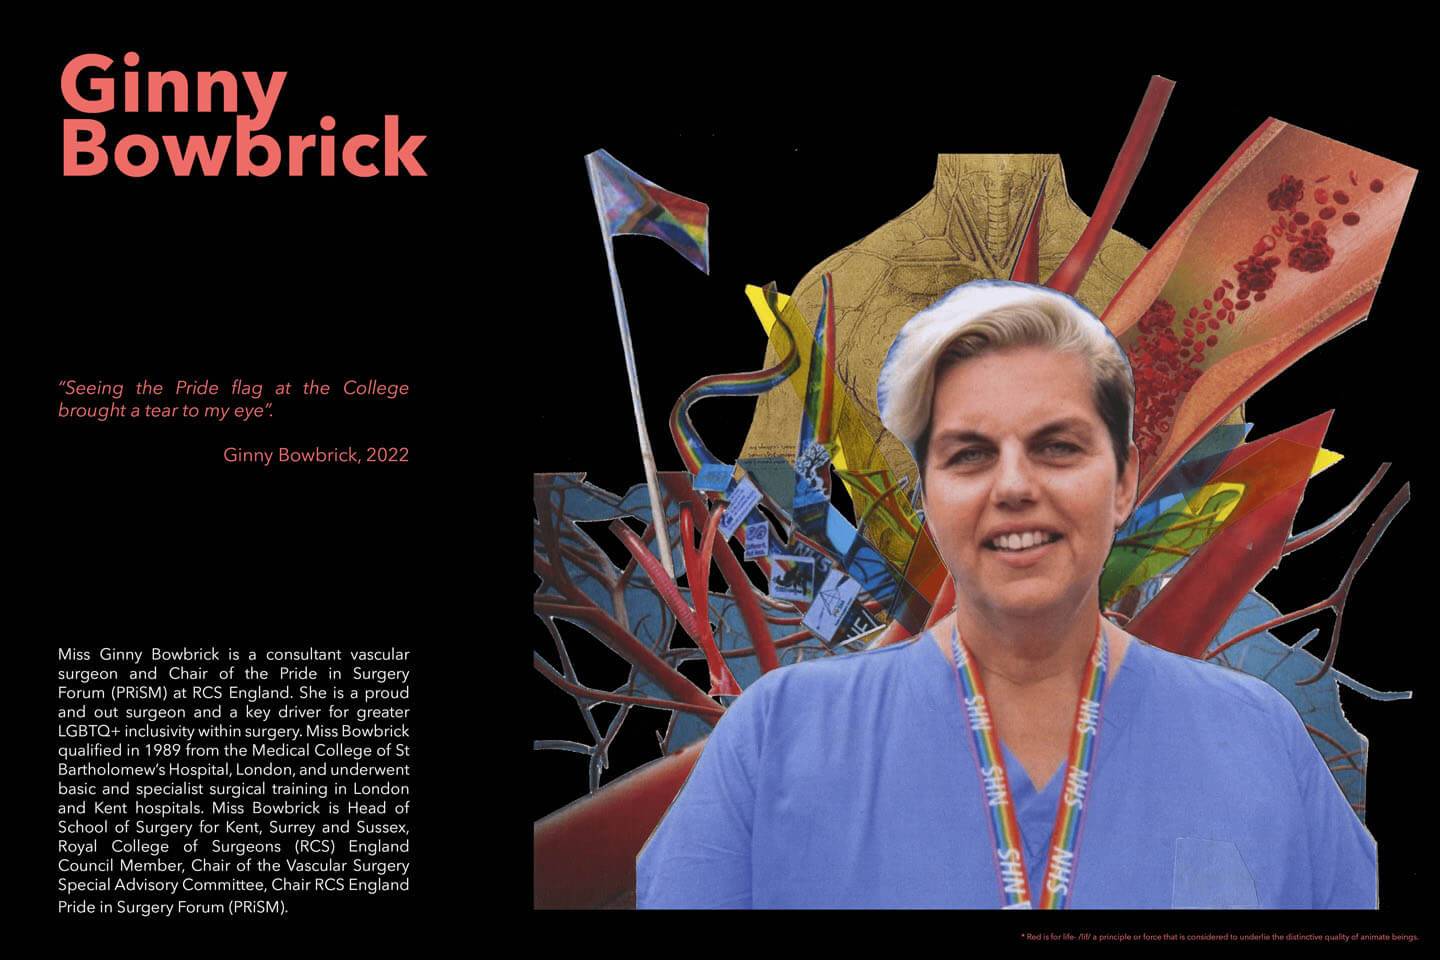 A poster celebrating Ginny Bowbrick